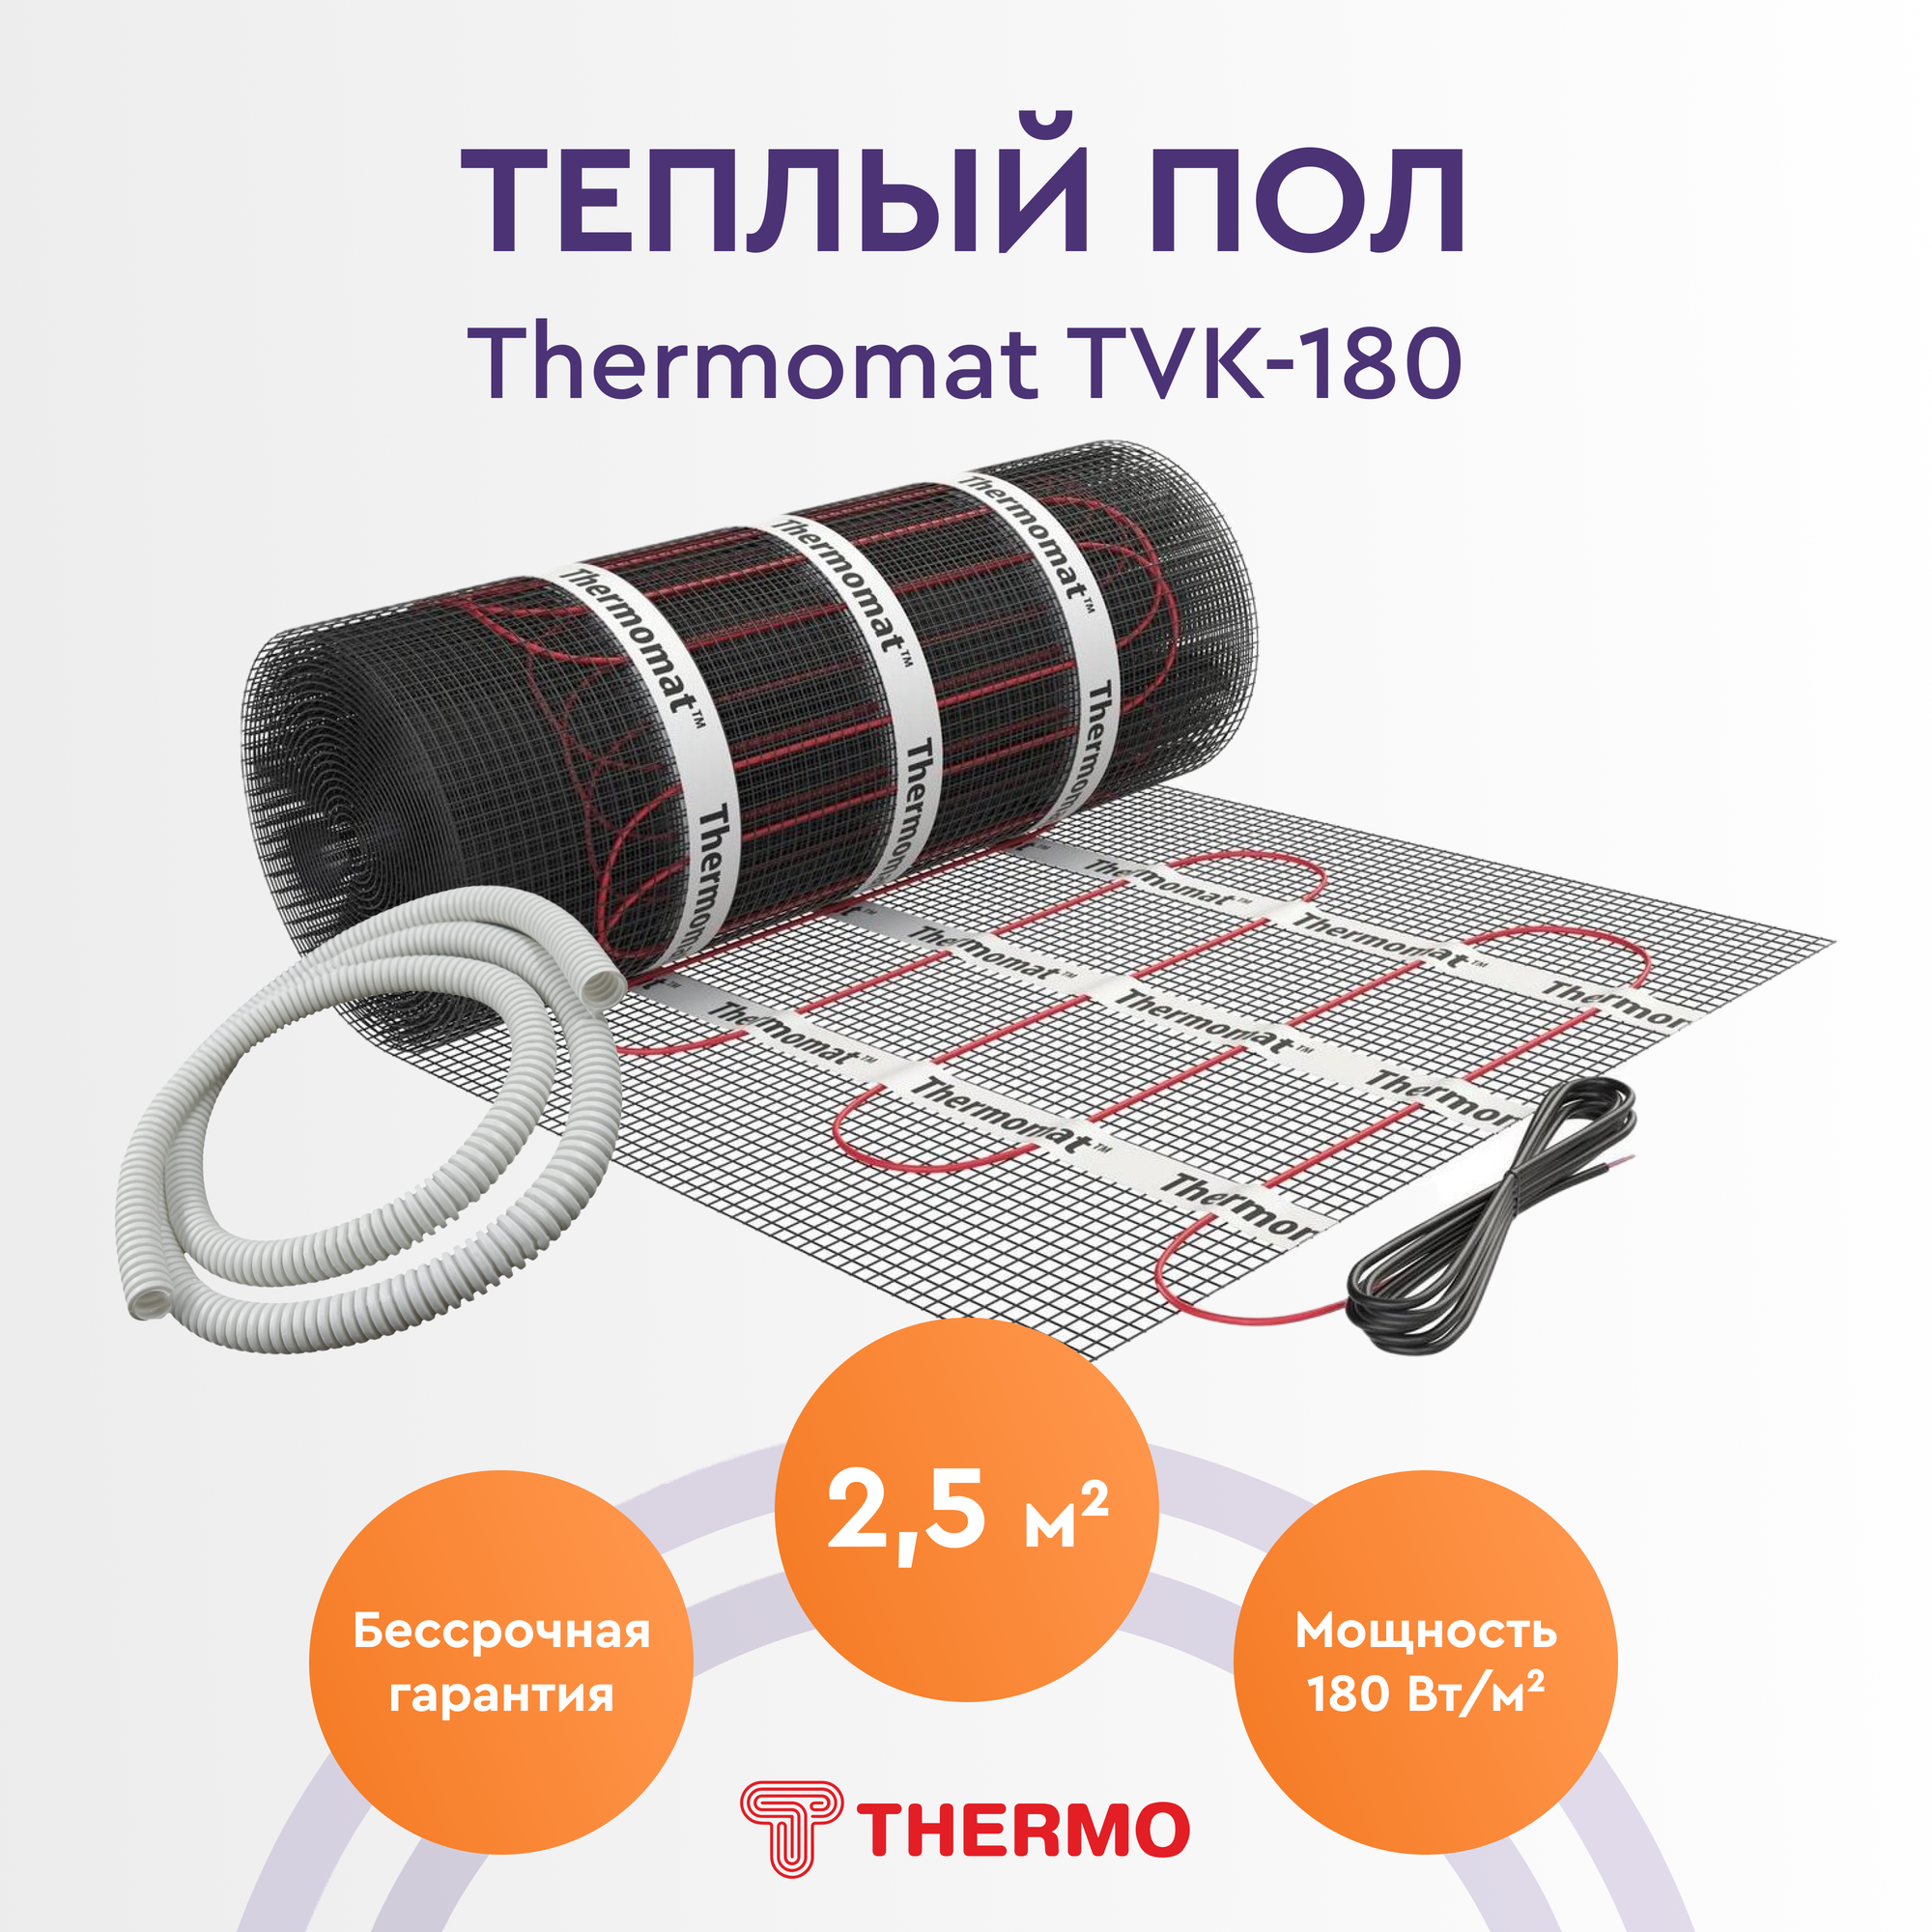 Теплый пол Thermo Thermomat TVK-180 2,5м. кв.